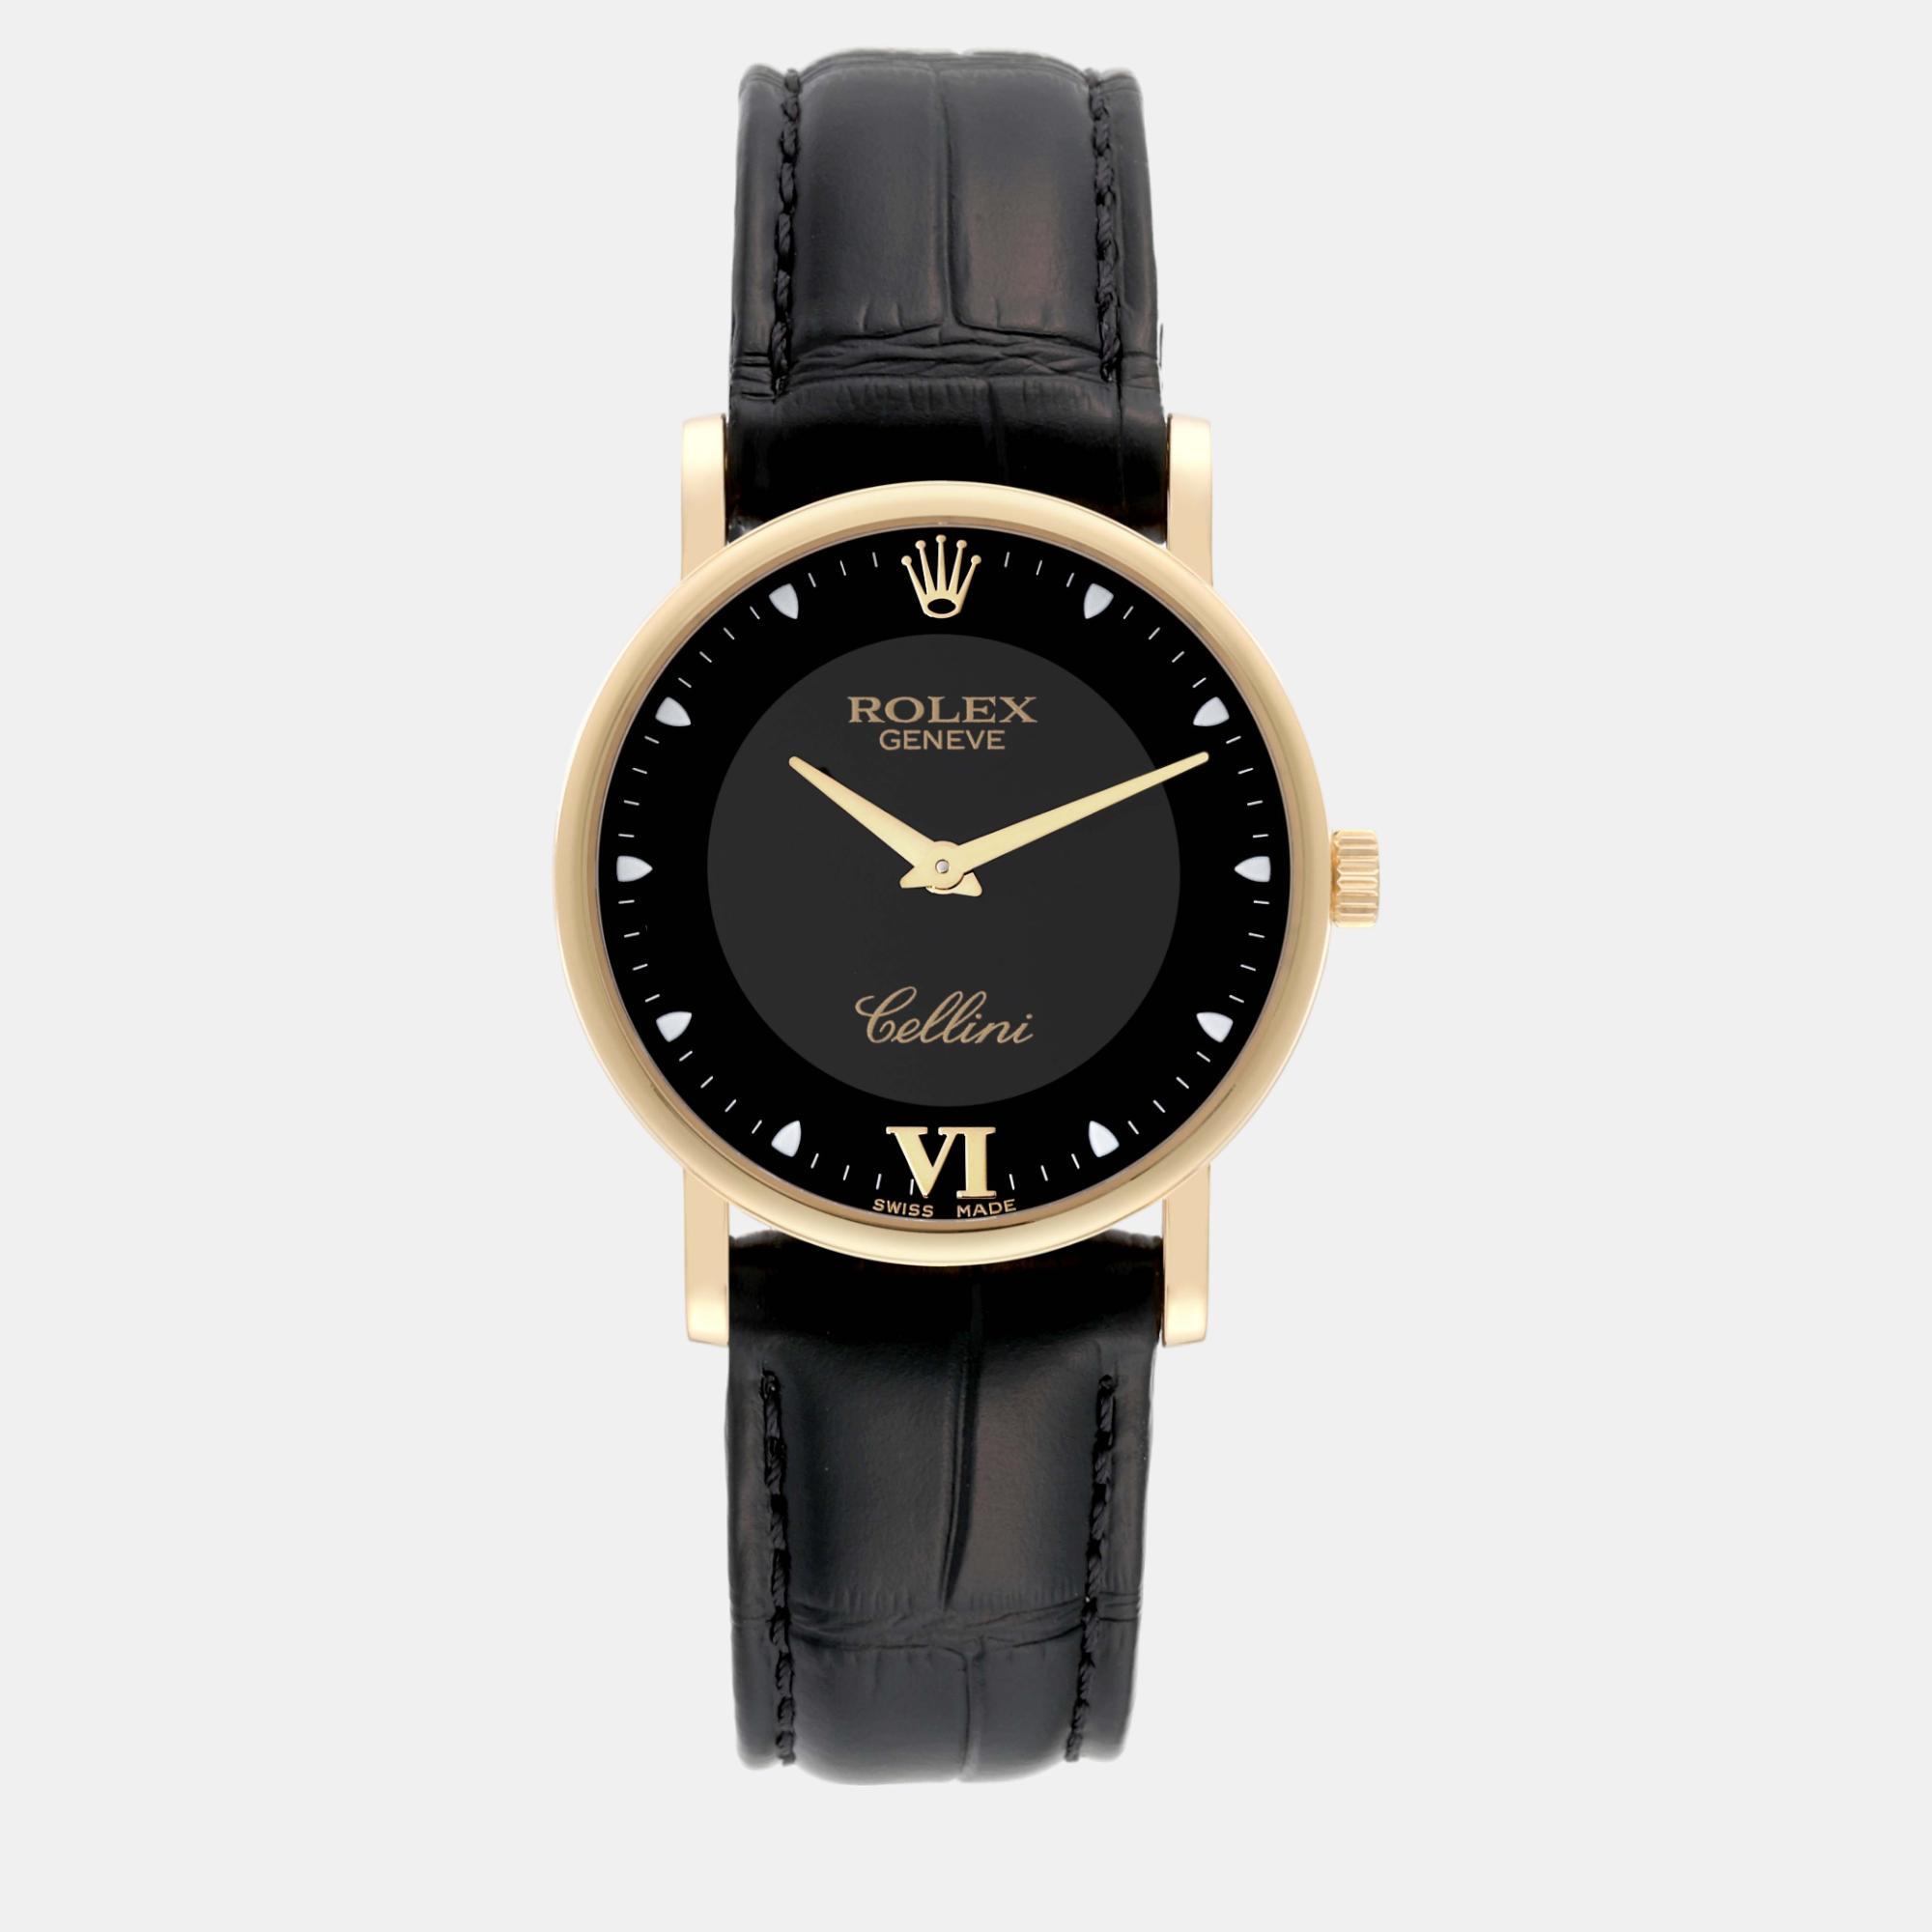 Rolex cellini classic yellow gold black dial men's watch 5115 31.8 mm